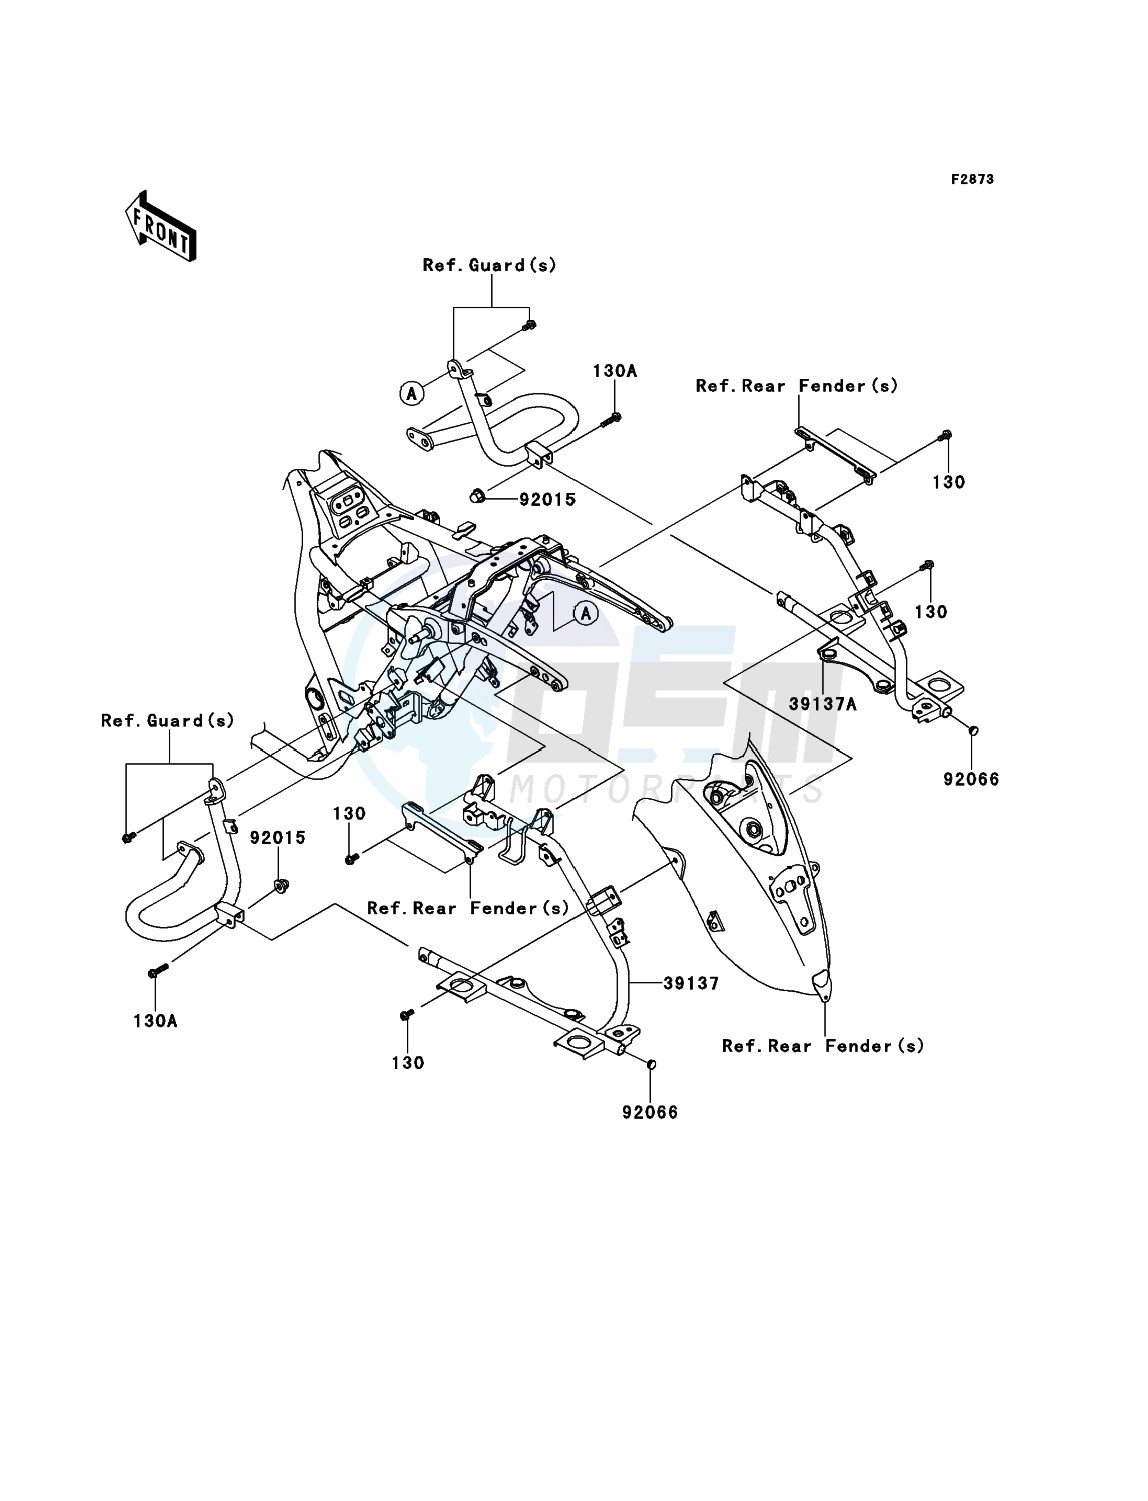 Saddlebags(Side Bag Bracket) blueprint